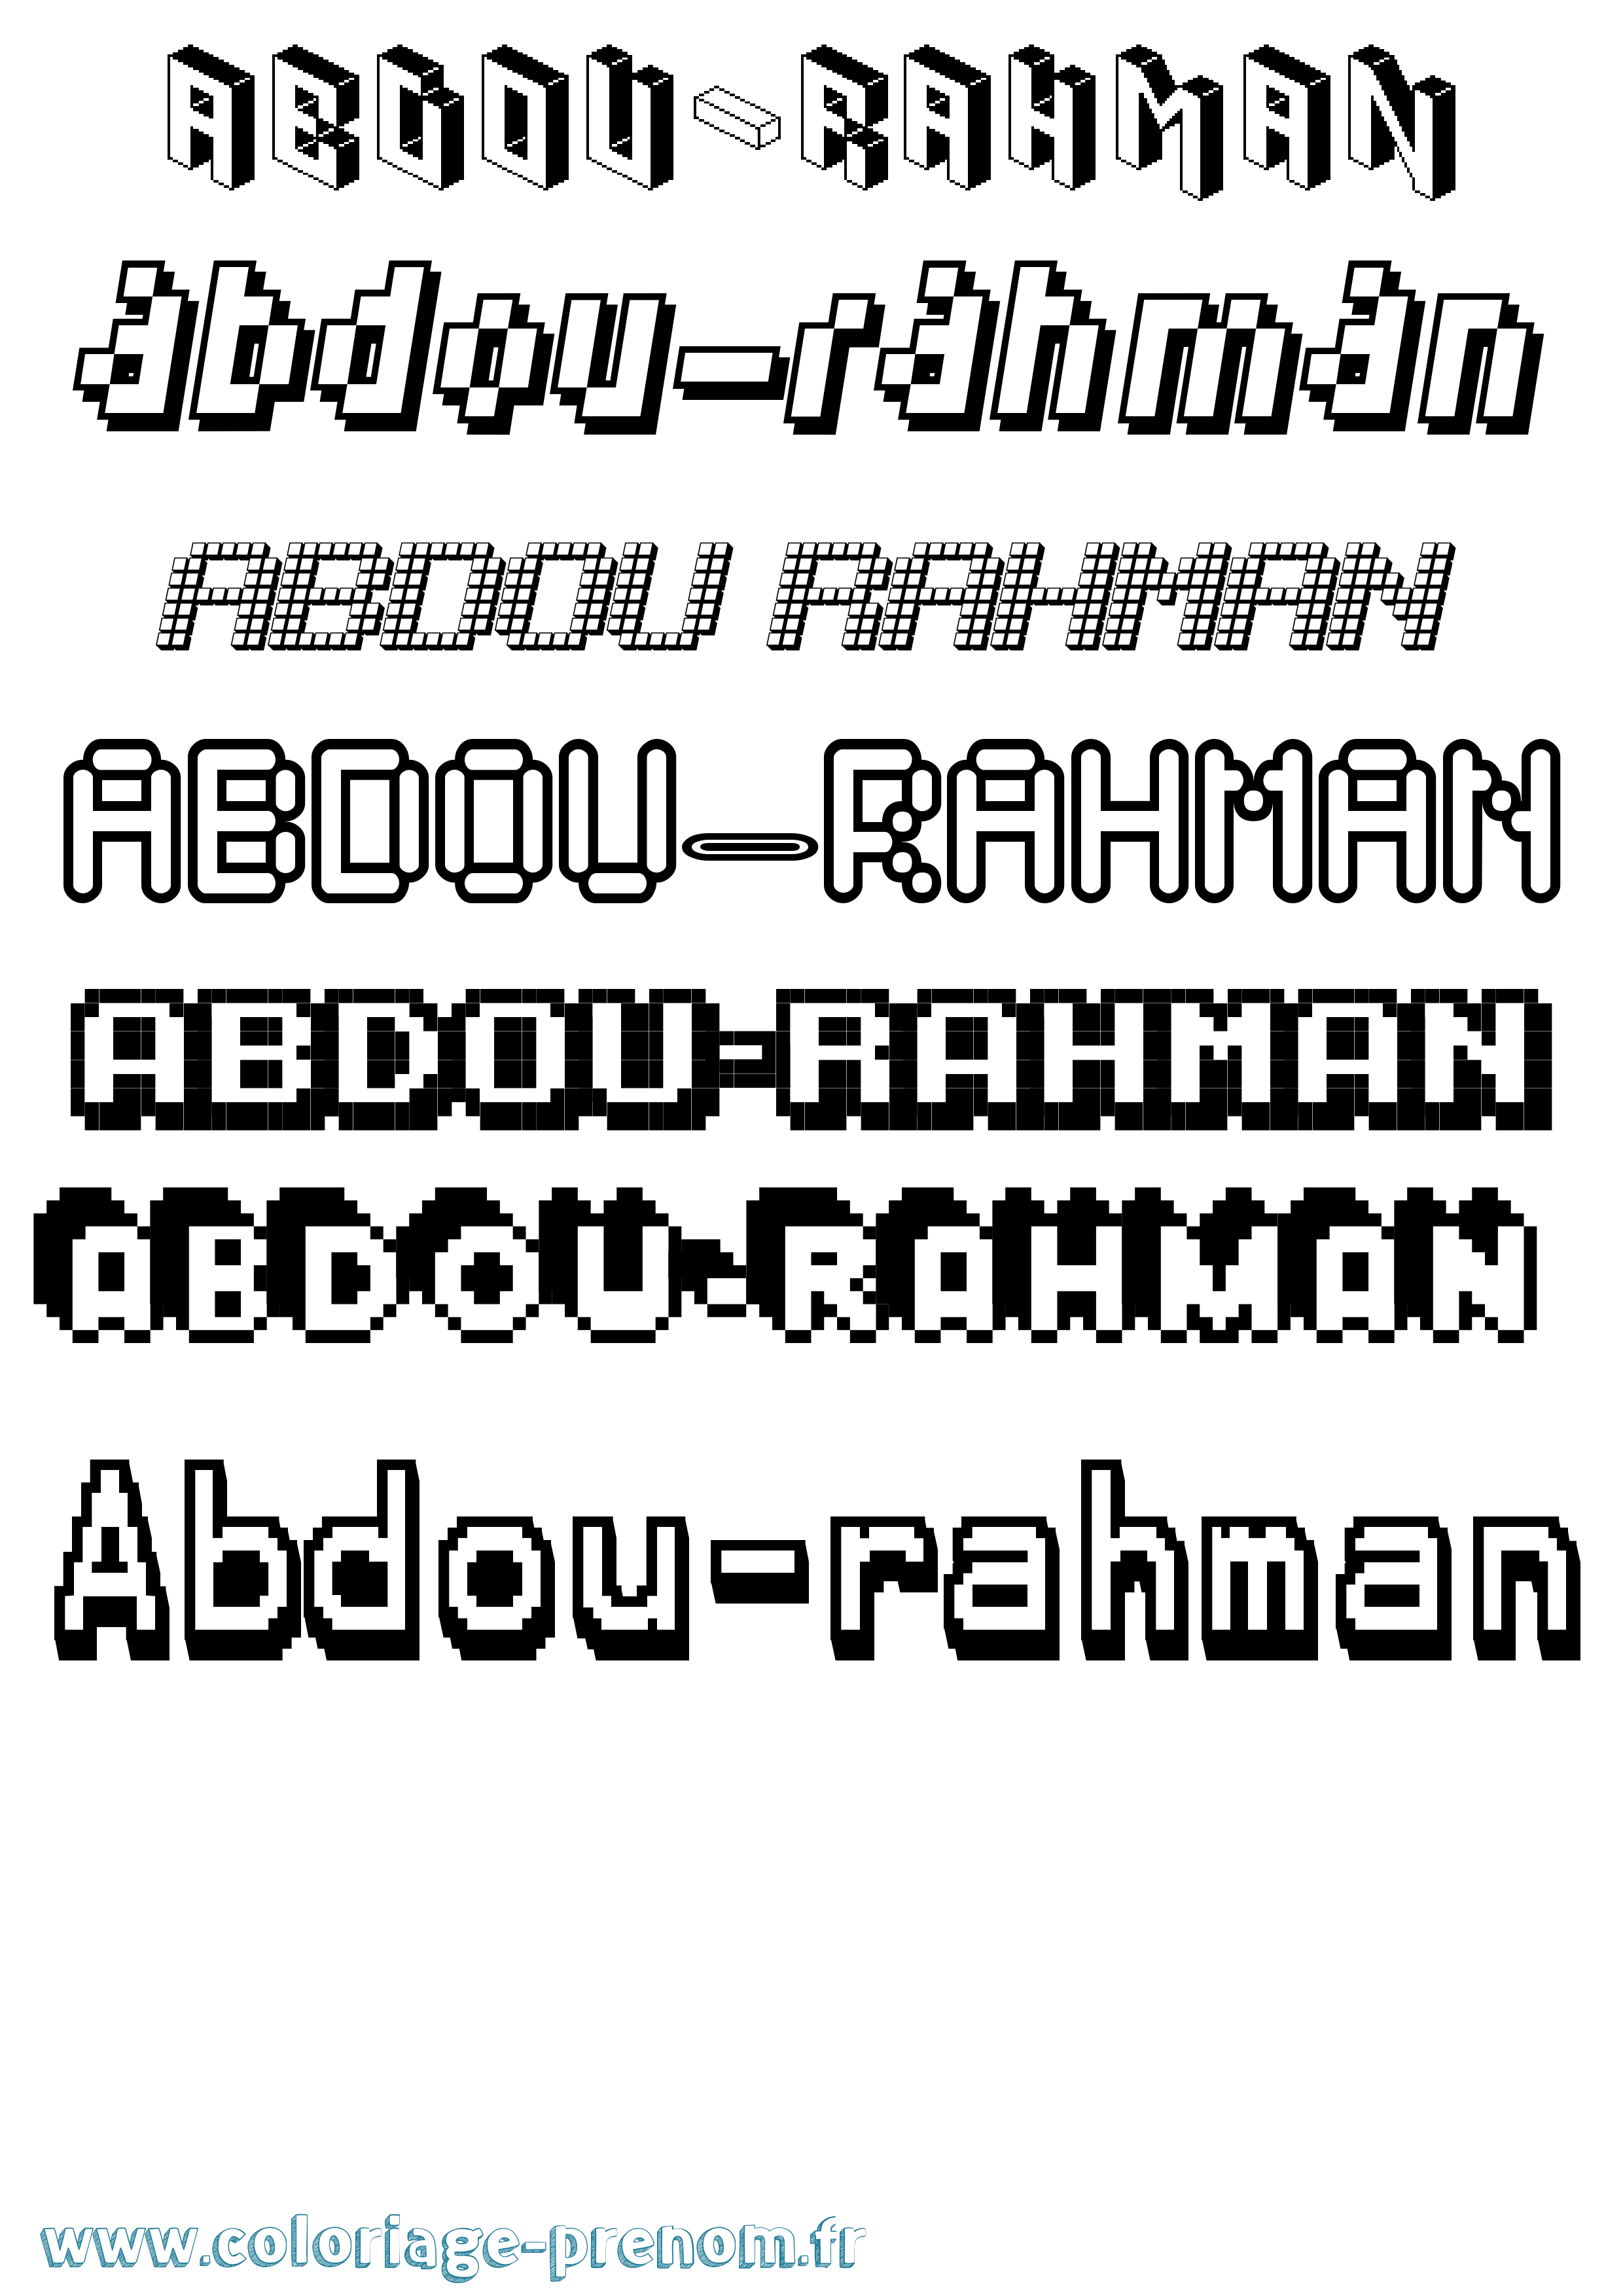 Coloriage prénom Abdou-Rahman Pixel